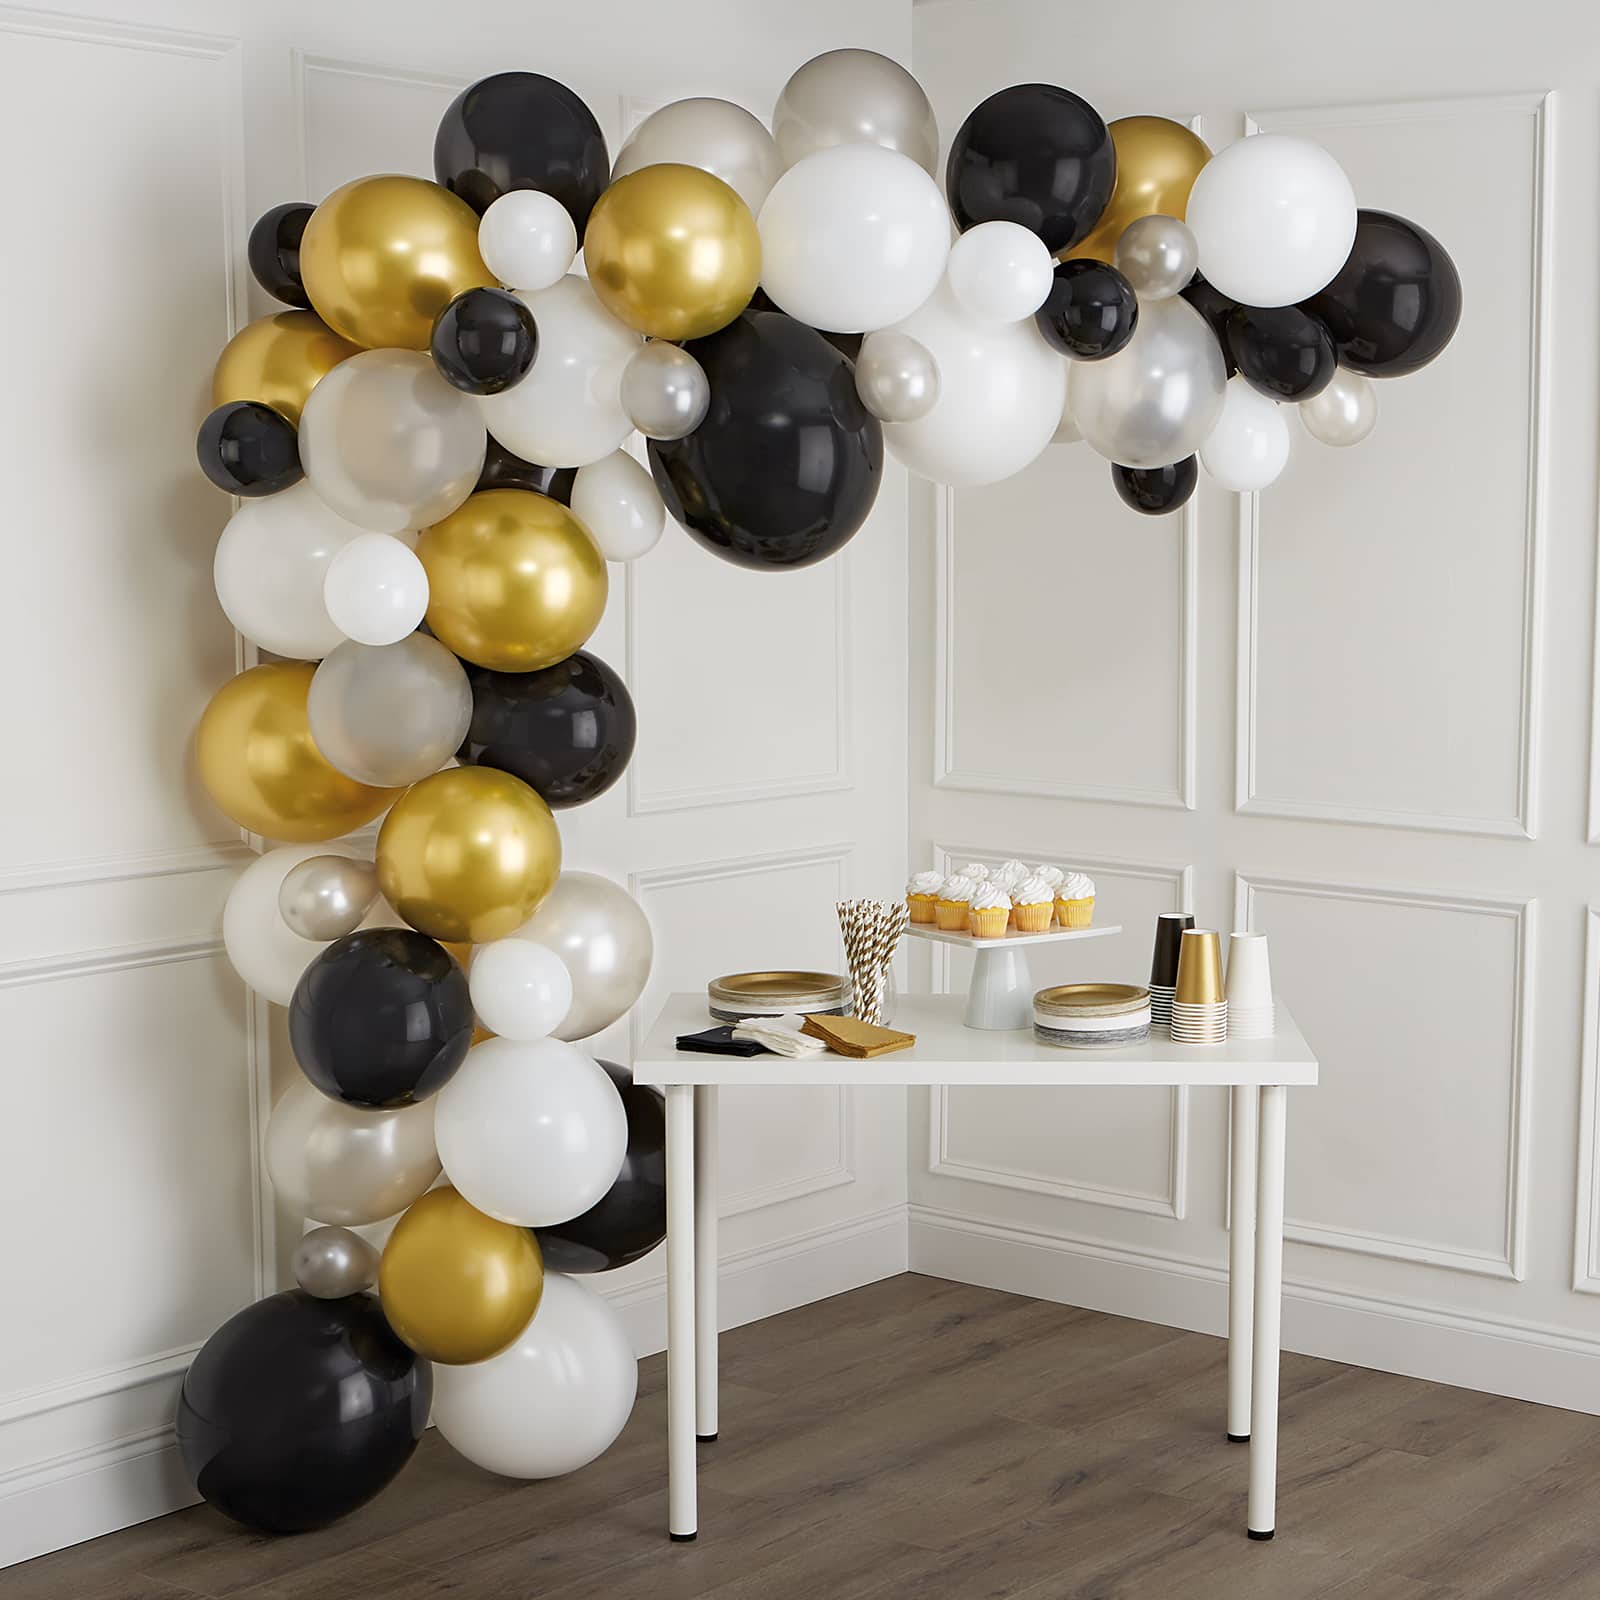 10ft. Black, White, Gray & Gold Balloon Garland by Celebrate It™